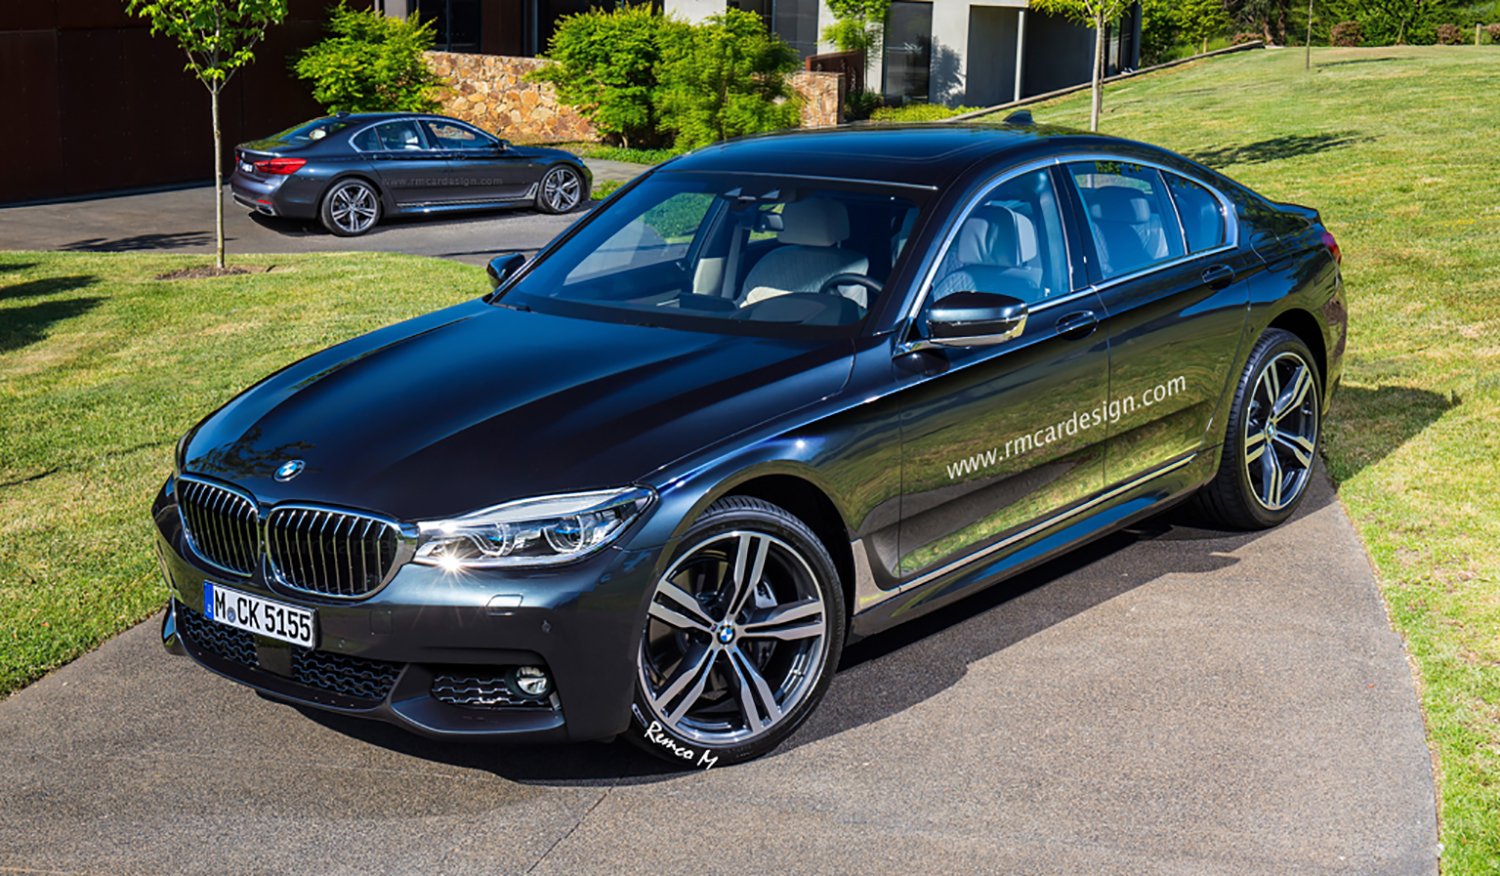 2017 BMW 5 Series sedan and Touring wagon rendered - photos | CarAdvice